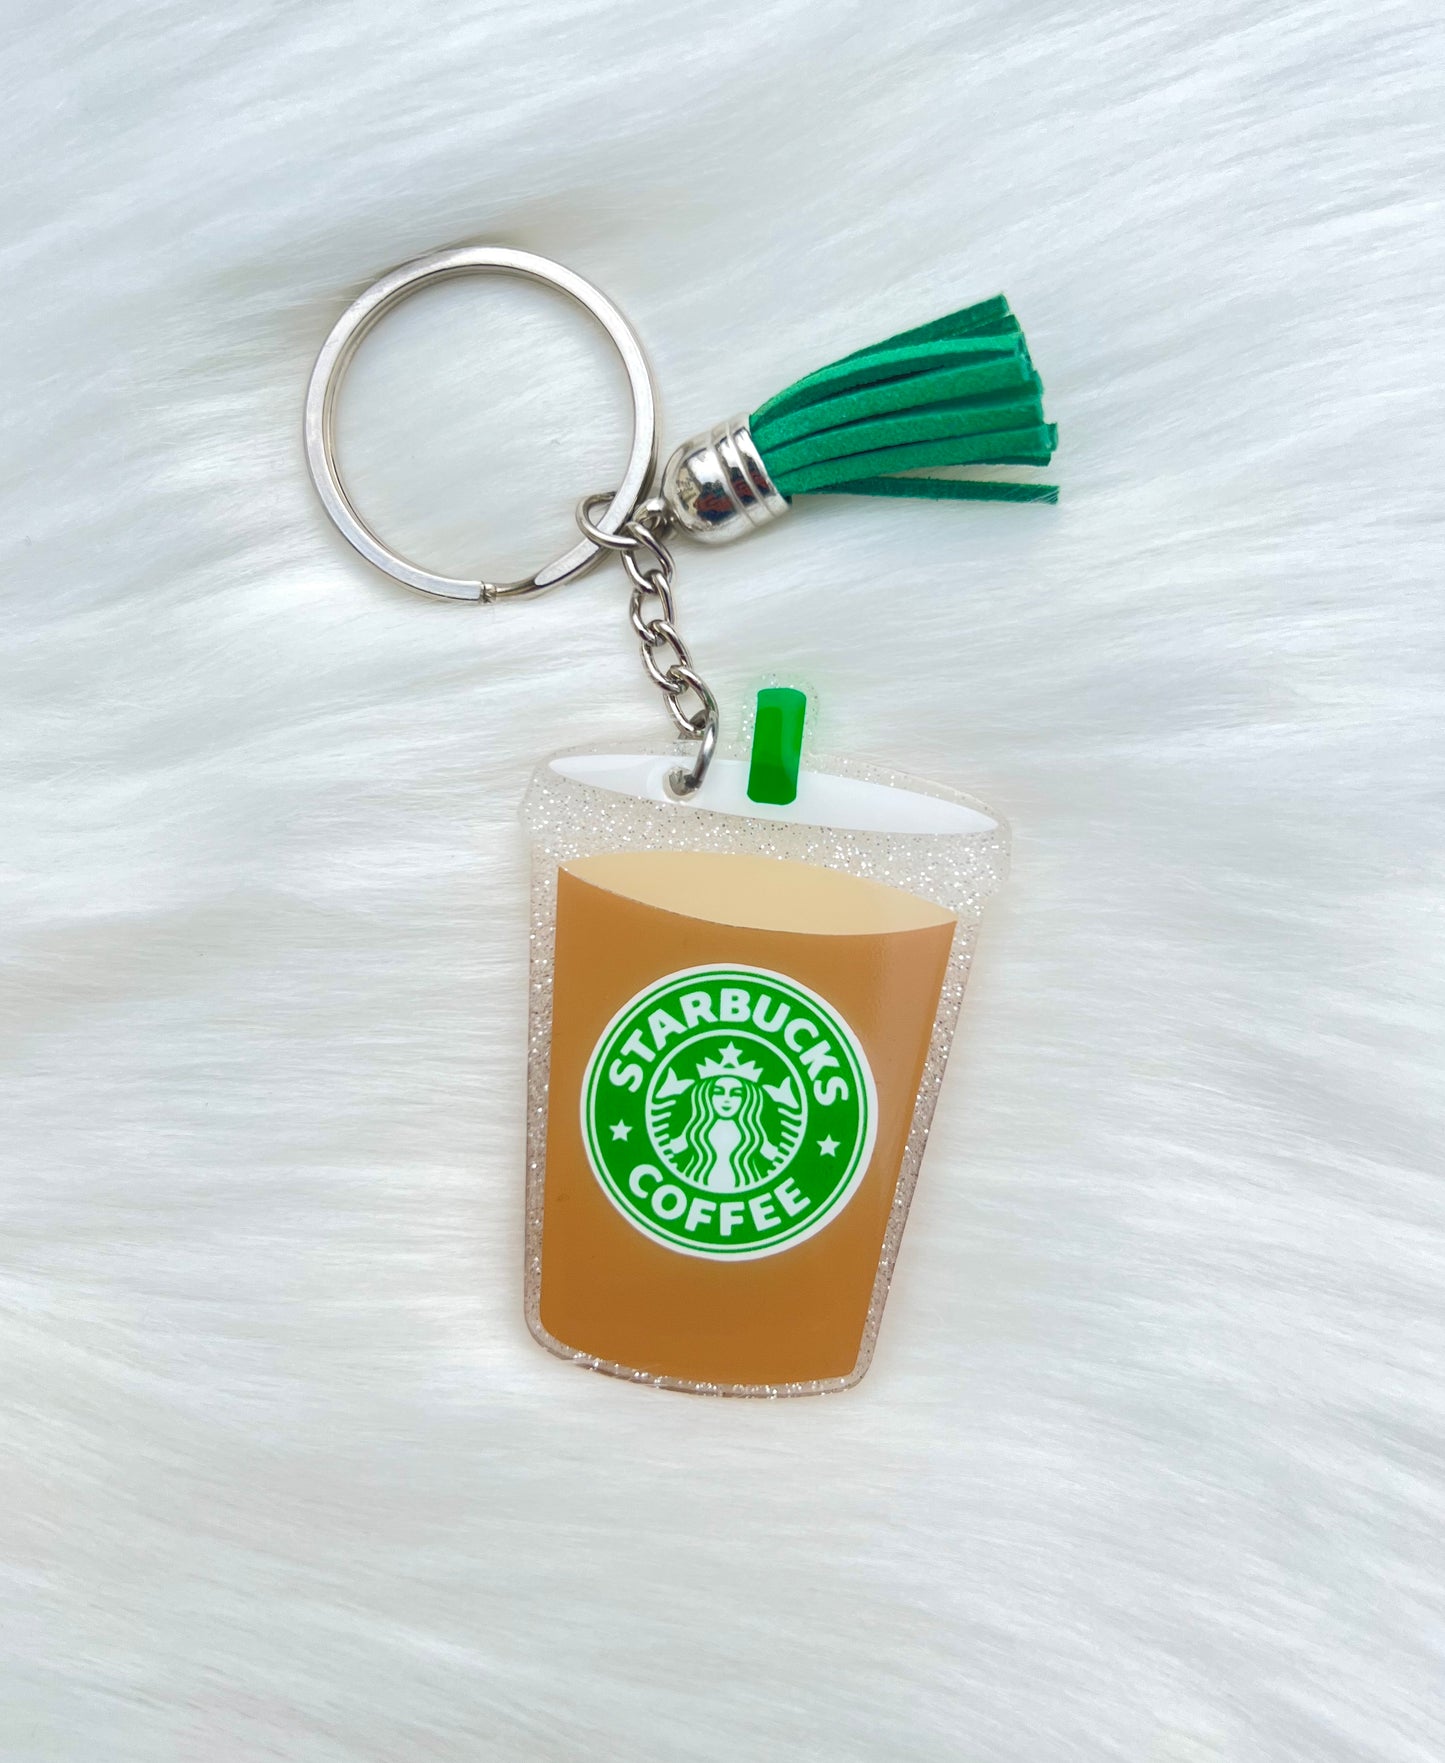 Iced Peach Green Tea Starbucks Keychain Keyring Starbucks Cup -  Hong  Kong